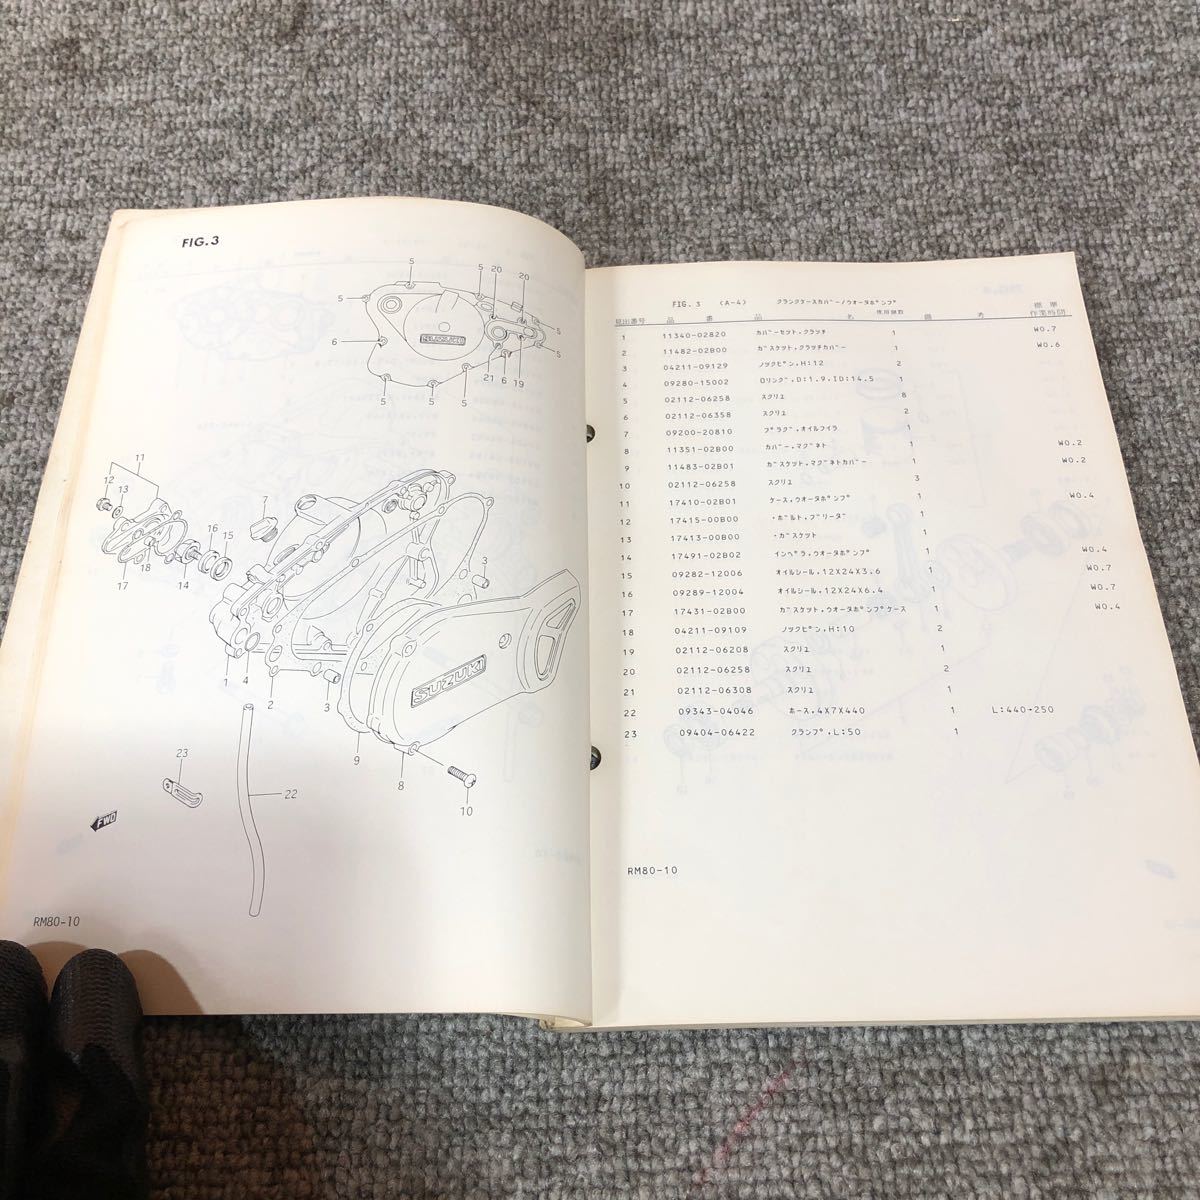 SUZUKI スズキ【RM80-10(RC12A)】 パーツカタログ 1985-9発行_画像4